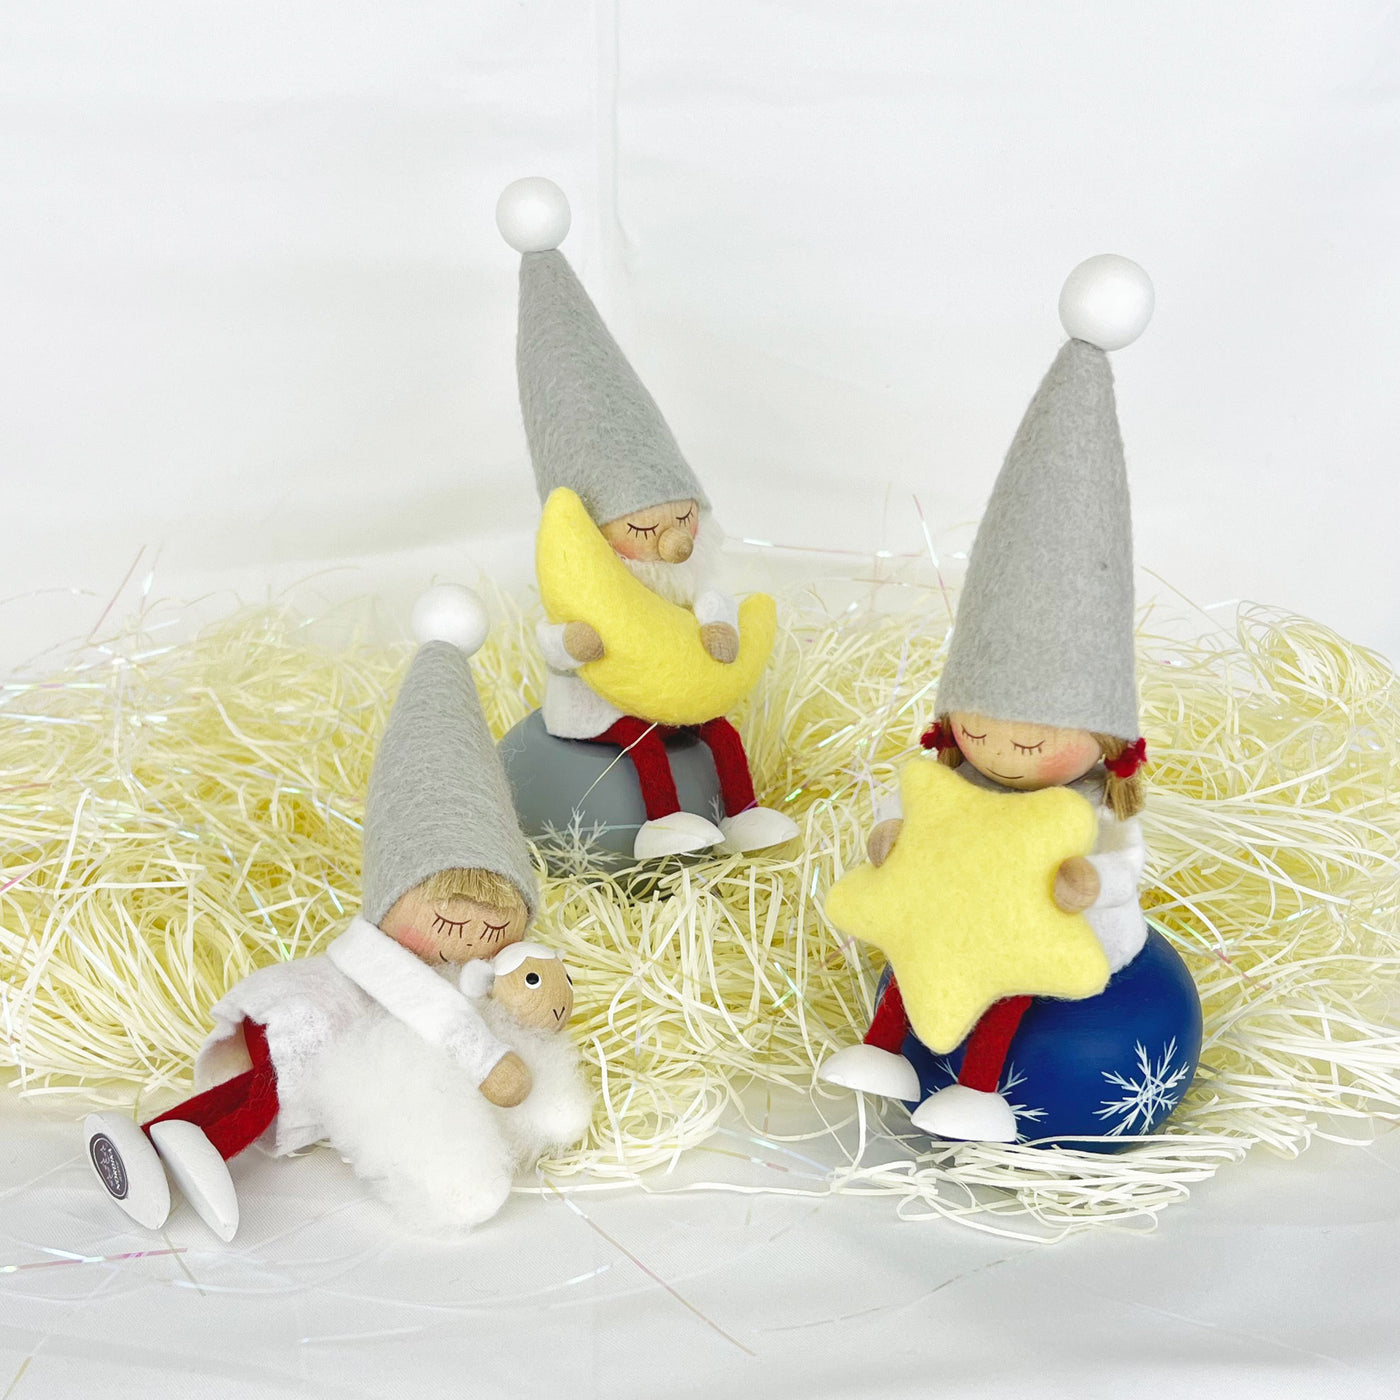 NORDIKA nisse ノルディカ ニッセ クリスマス 木製人形 ( スツール / スノーフレーク / グレー )